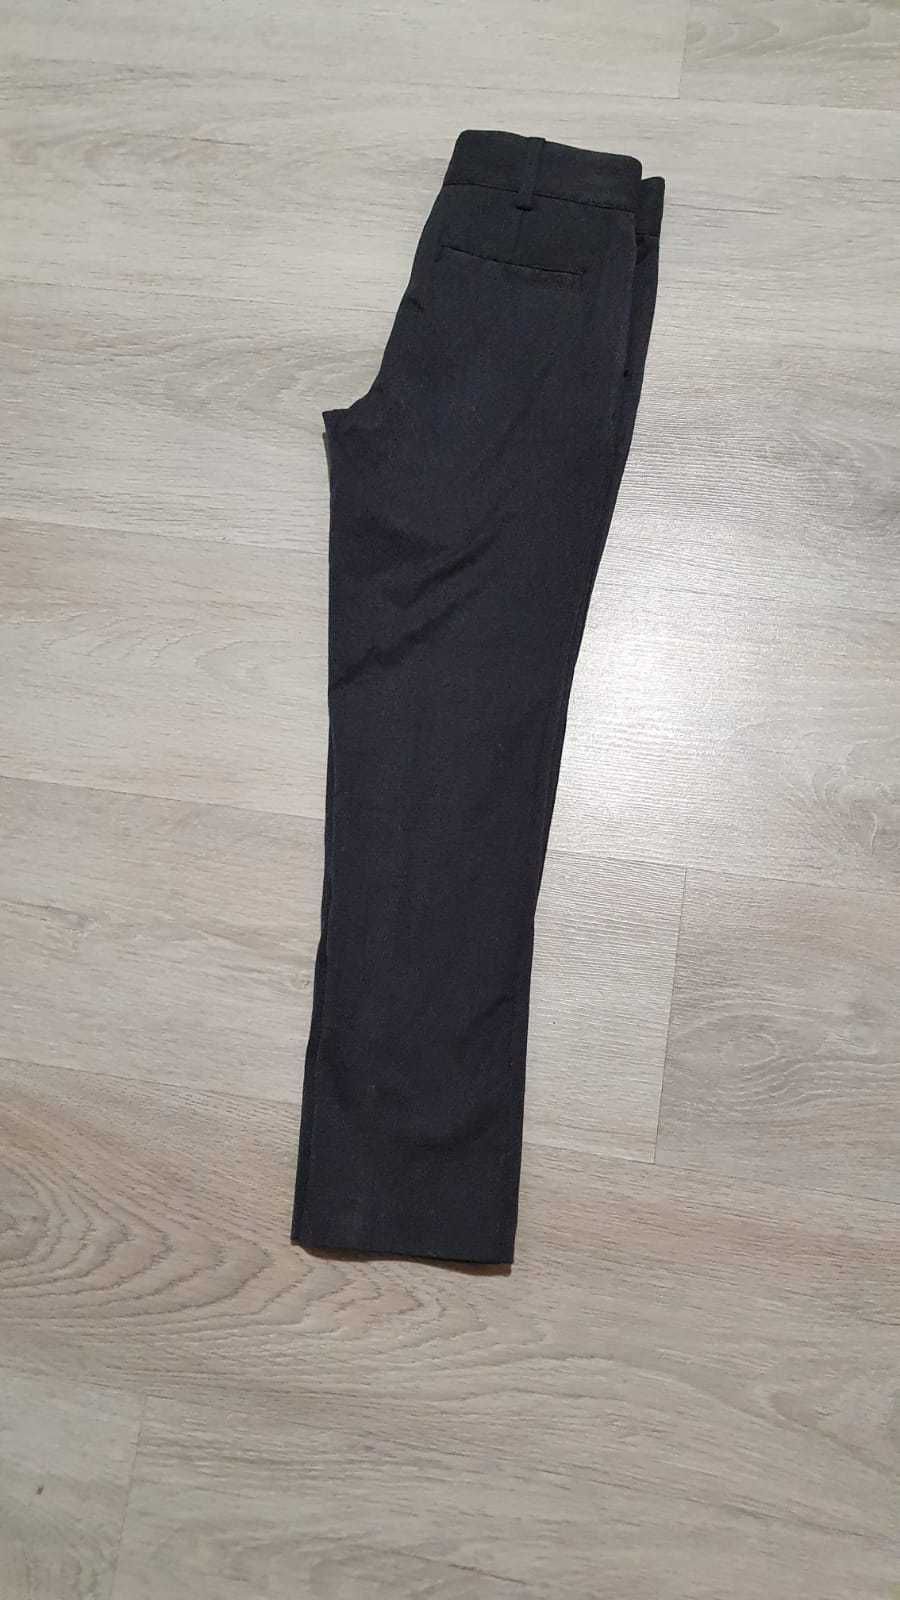 Pantaloni Jacadi - 8 ani / 128 cm